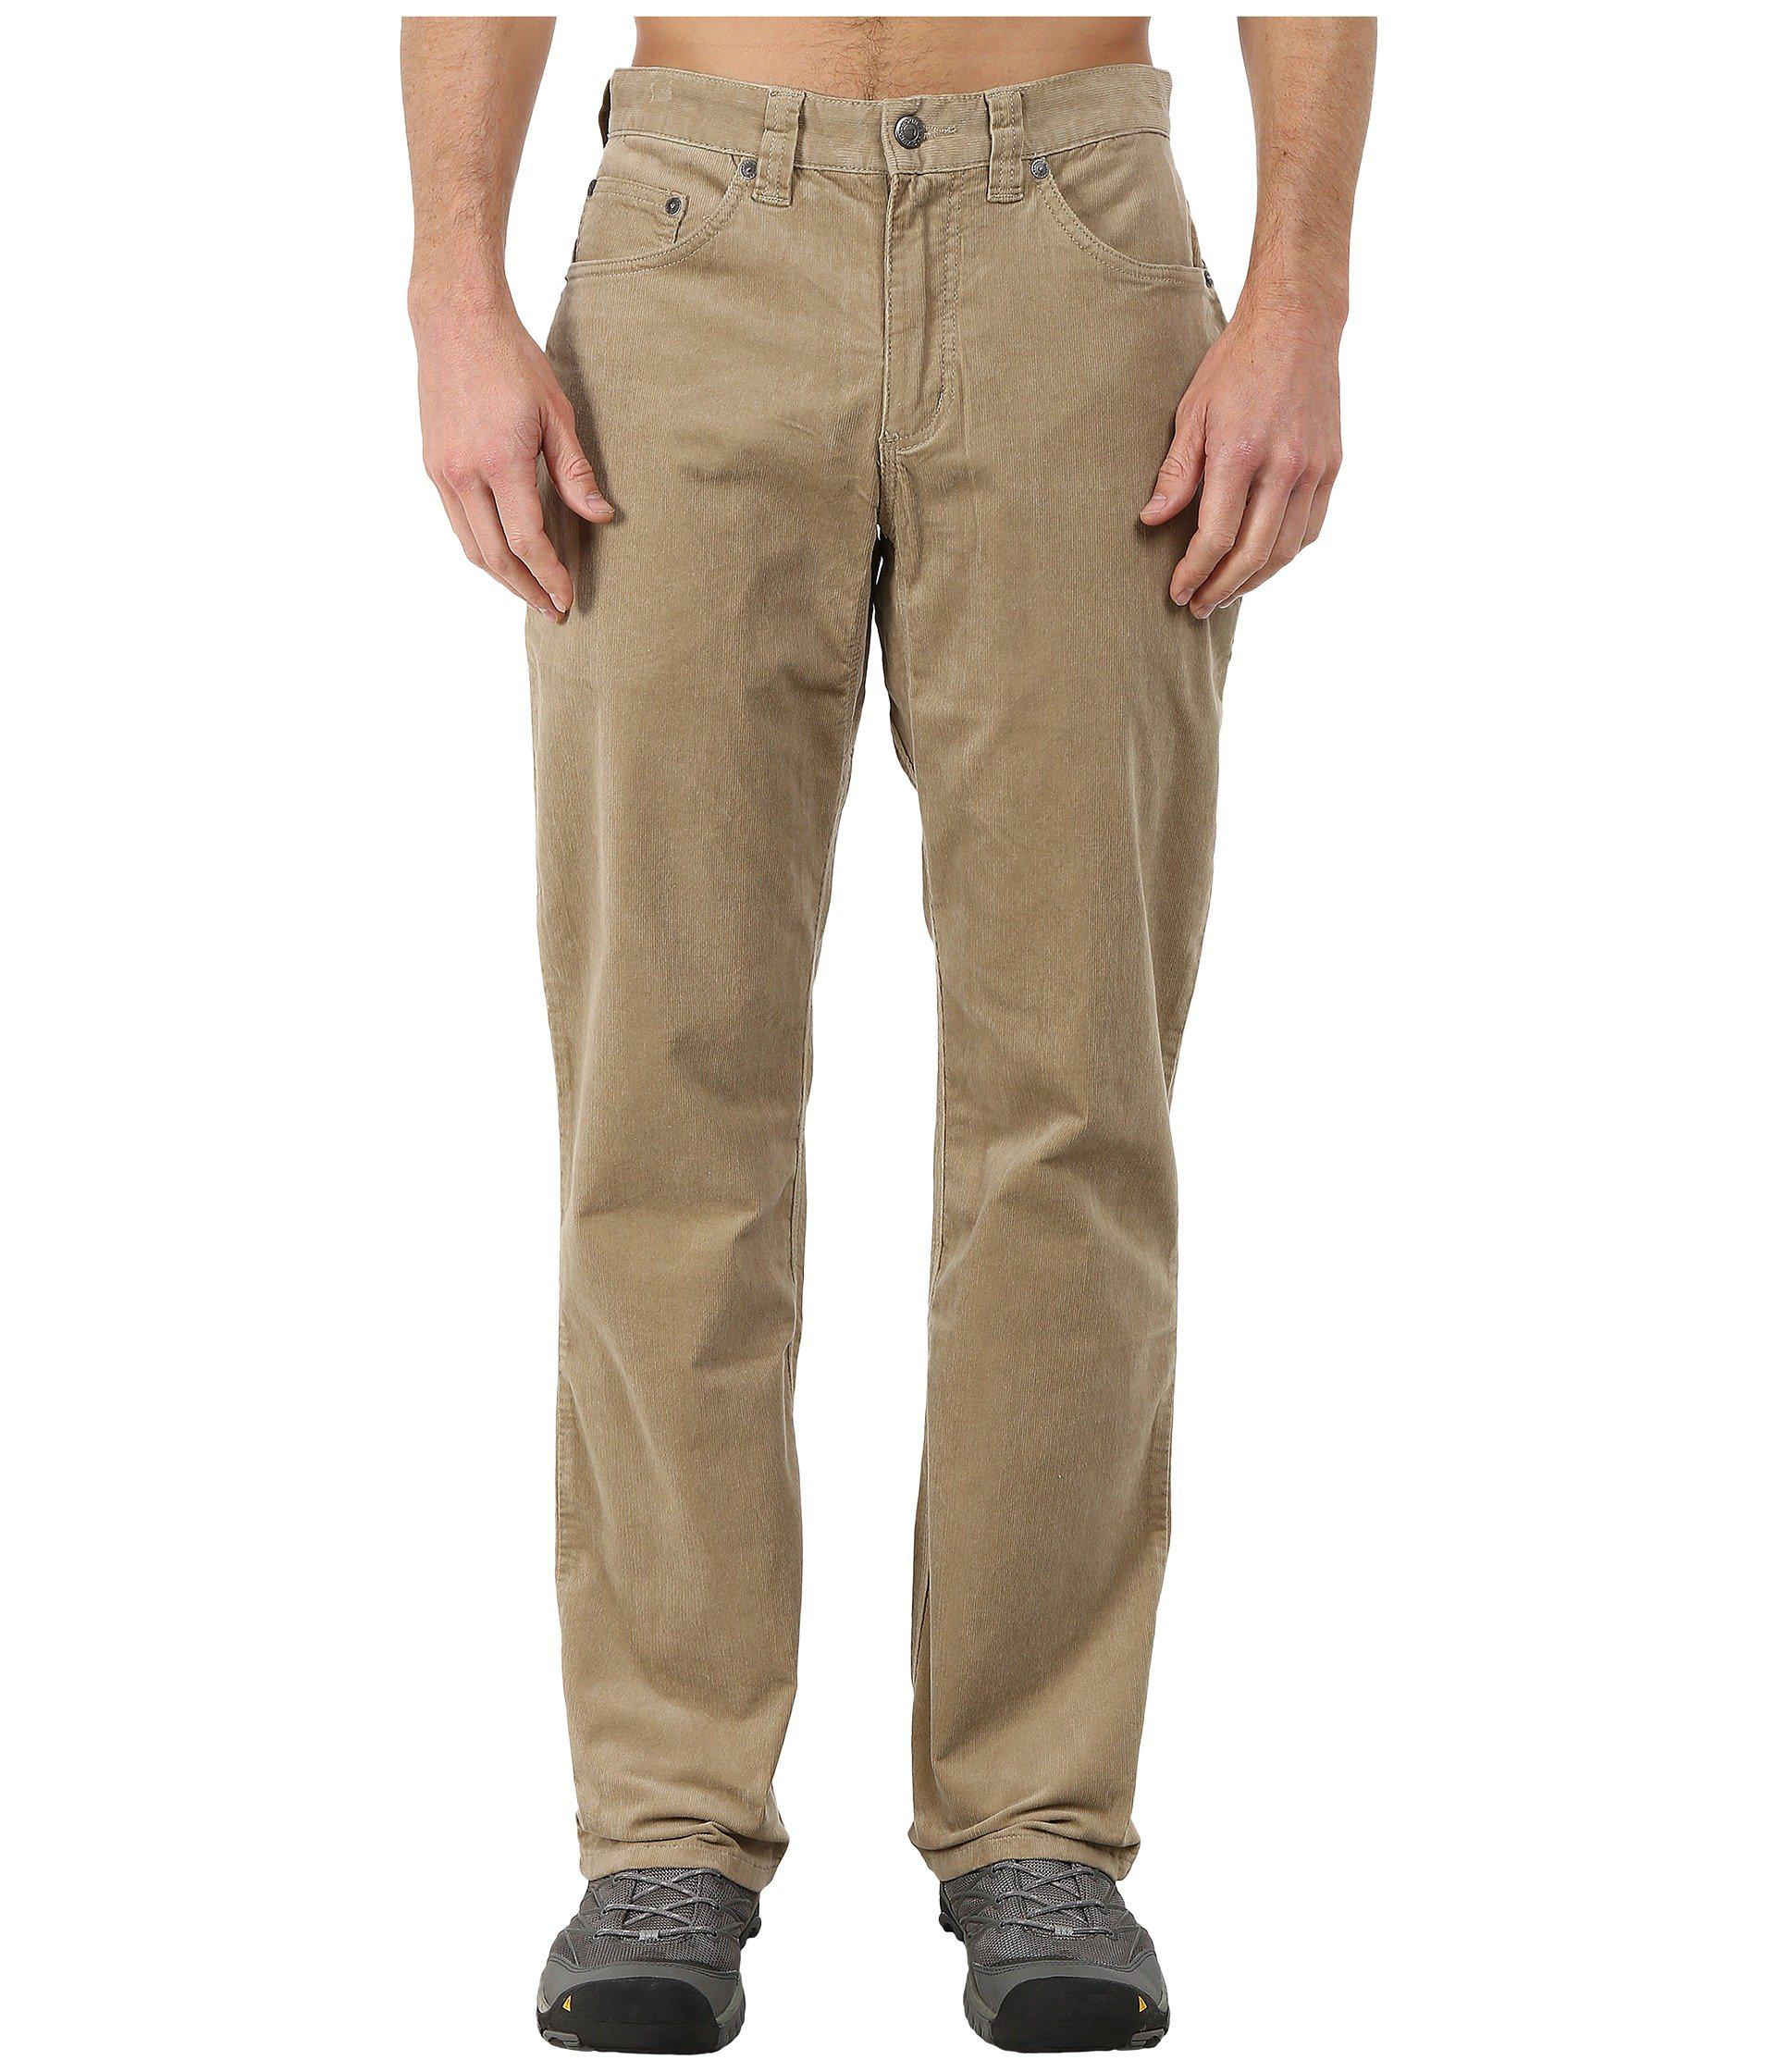 Lyst - Mountain Khakis Canyon Cord Pants (ash) Men's Casual Pants in ...